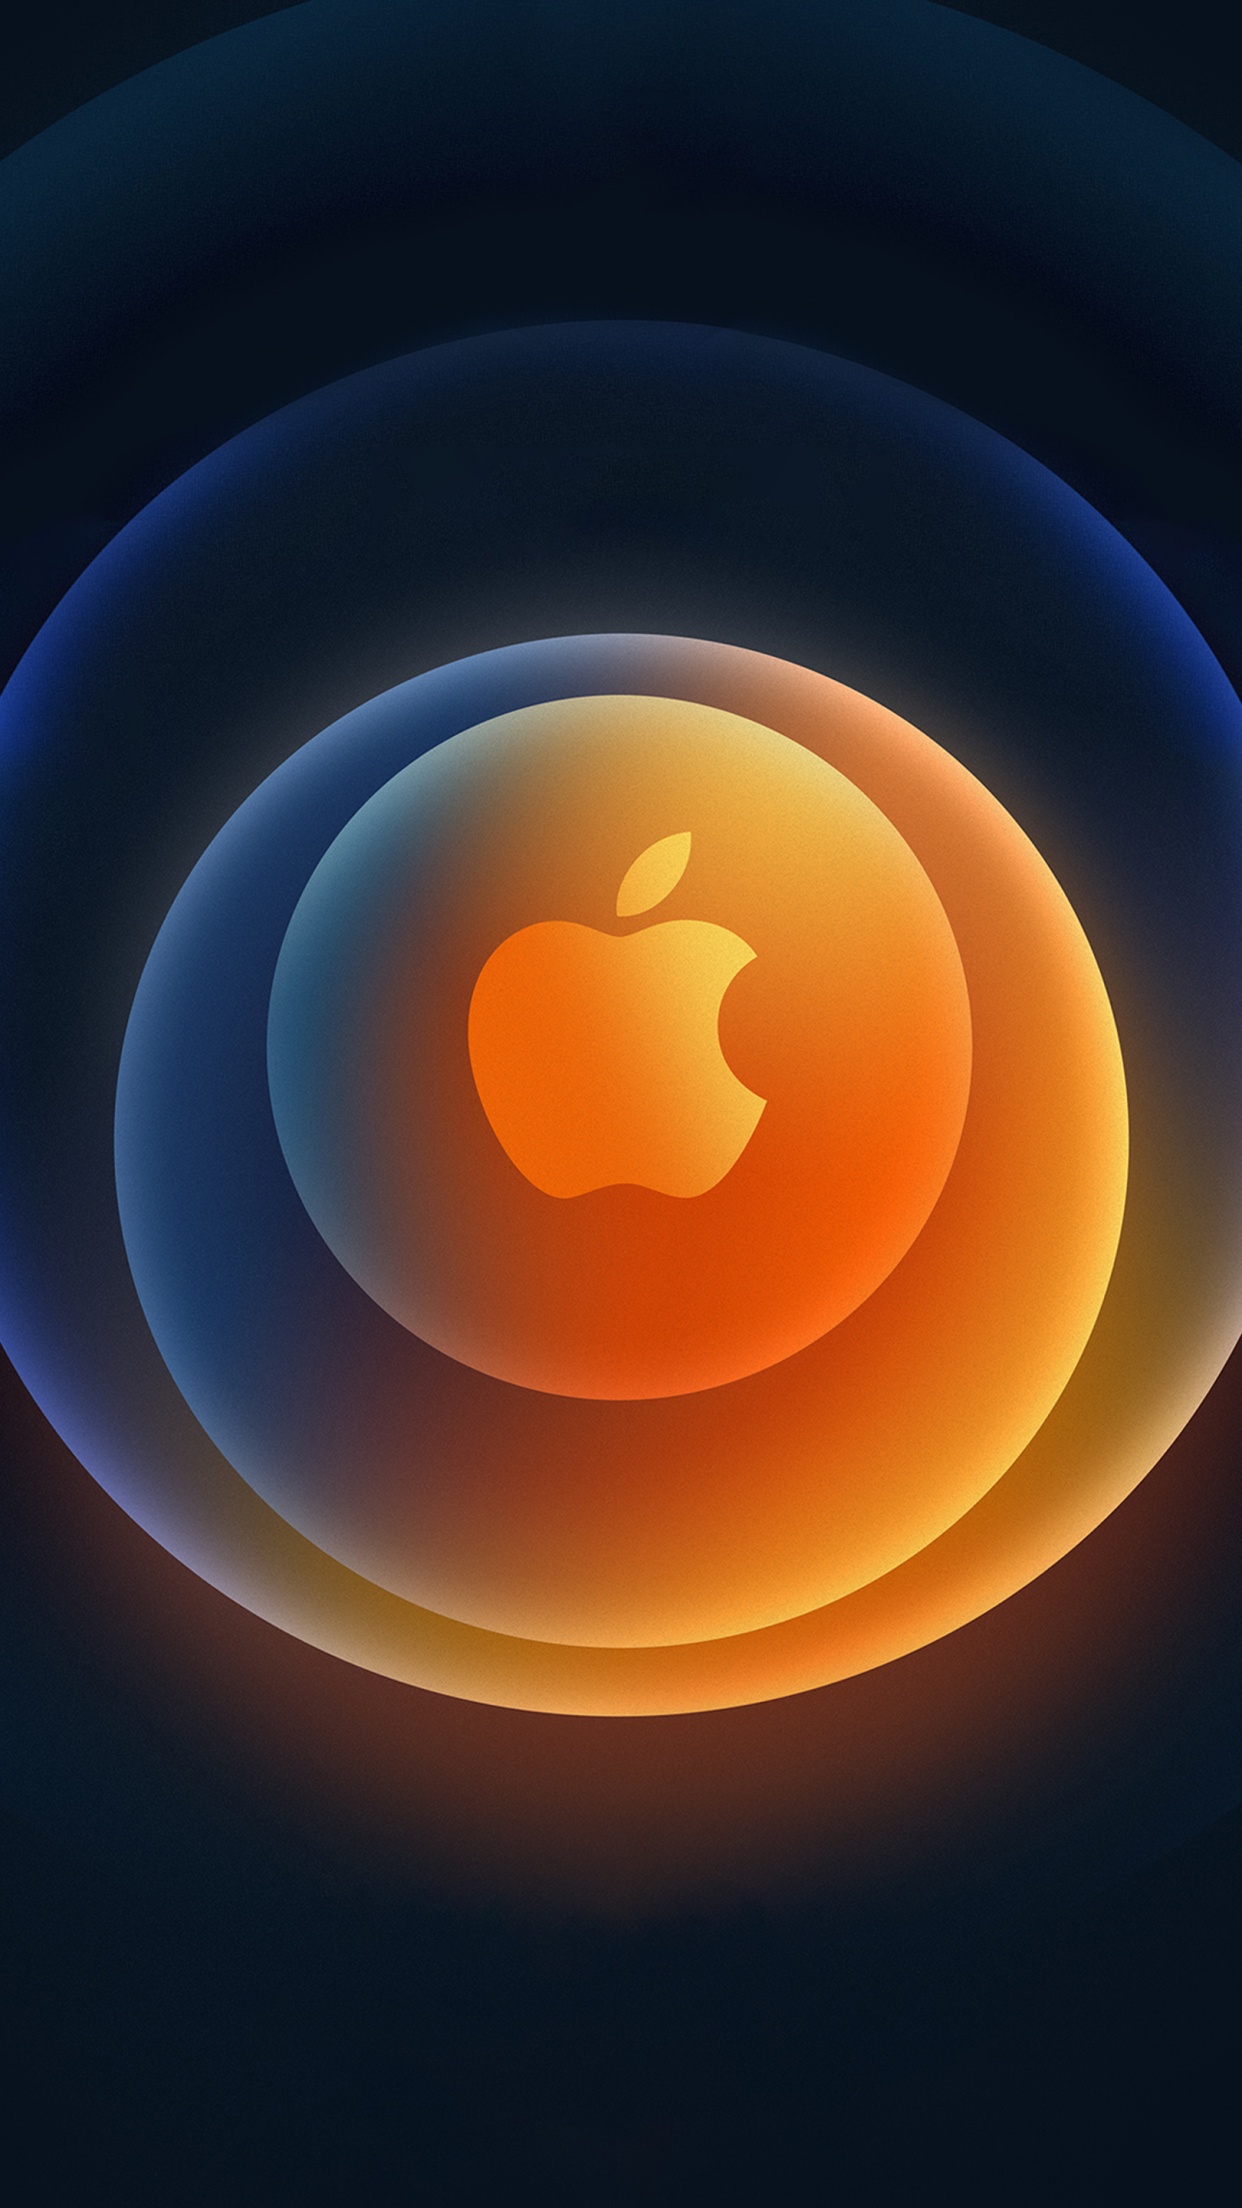 Apple WWDC Logo iPhone Wallpaper HD - iPhone Wallpapers